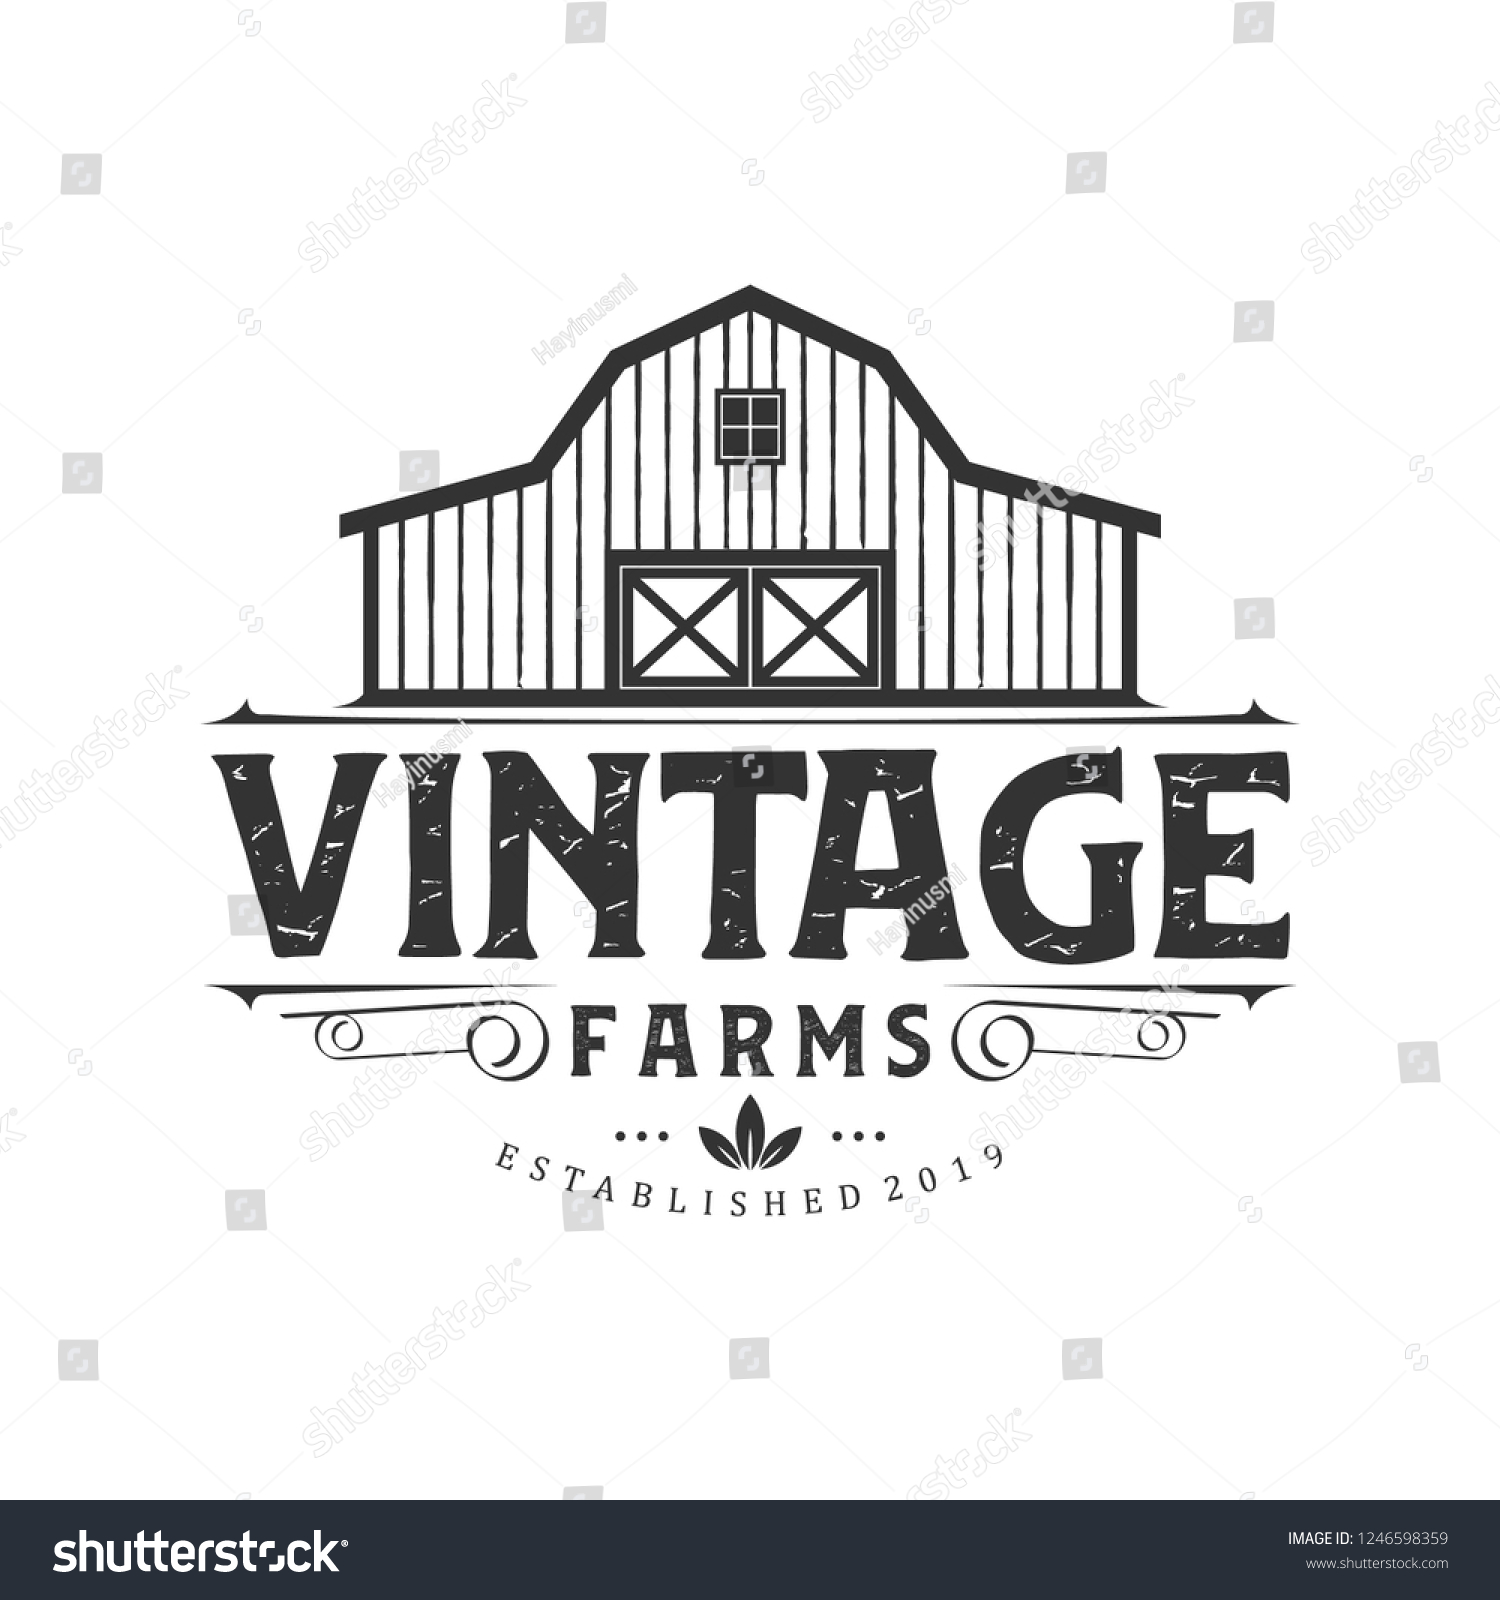 Vintage farm logo design - barn wood building house farm cow cattle  #1246598359